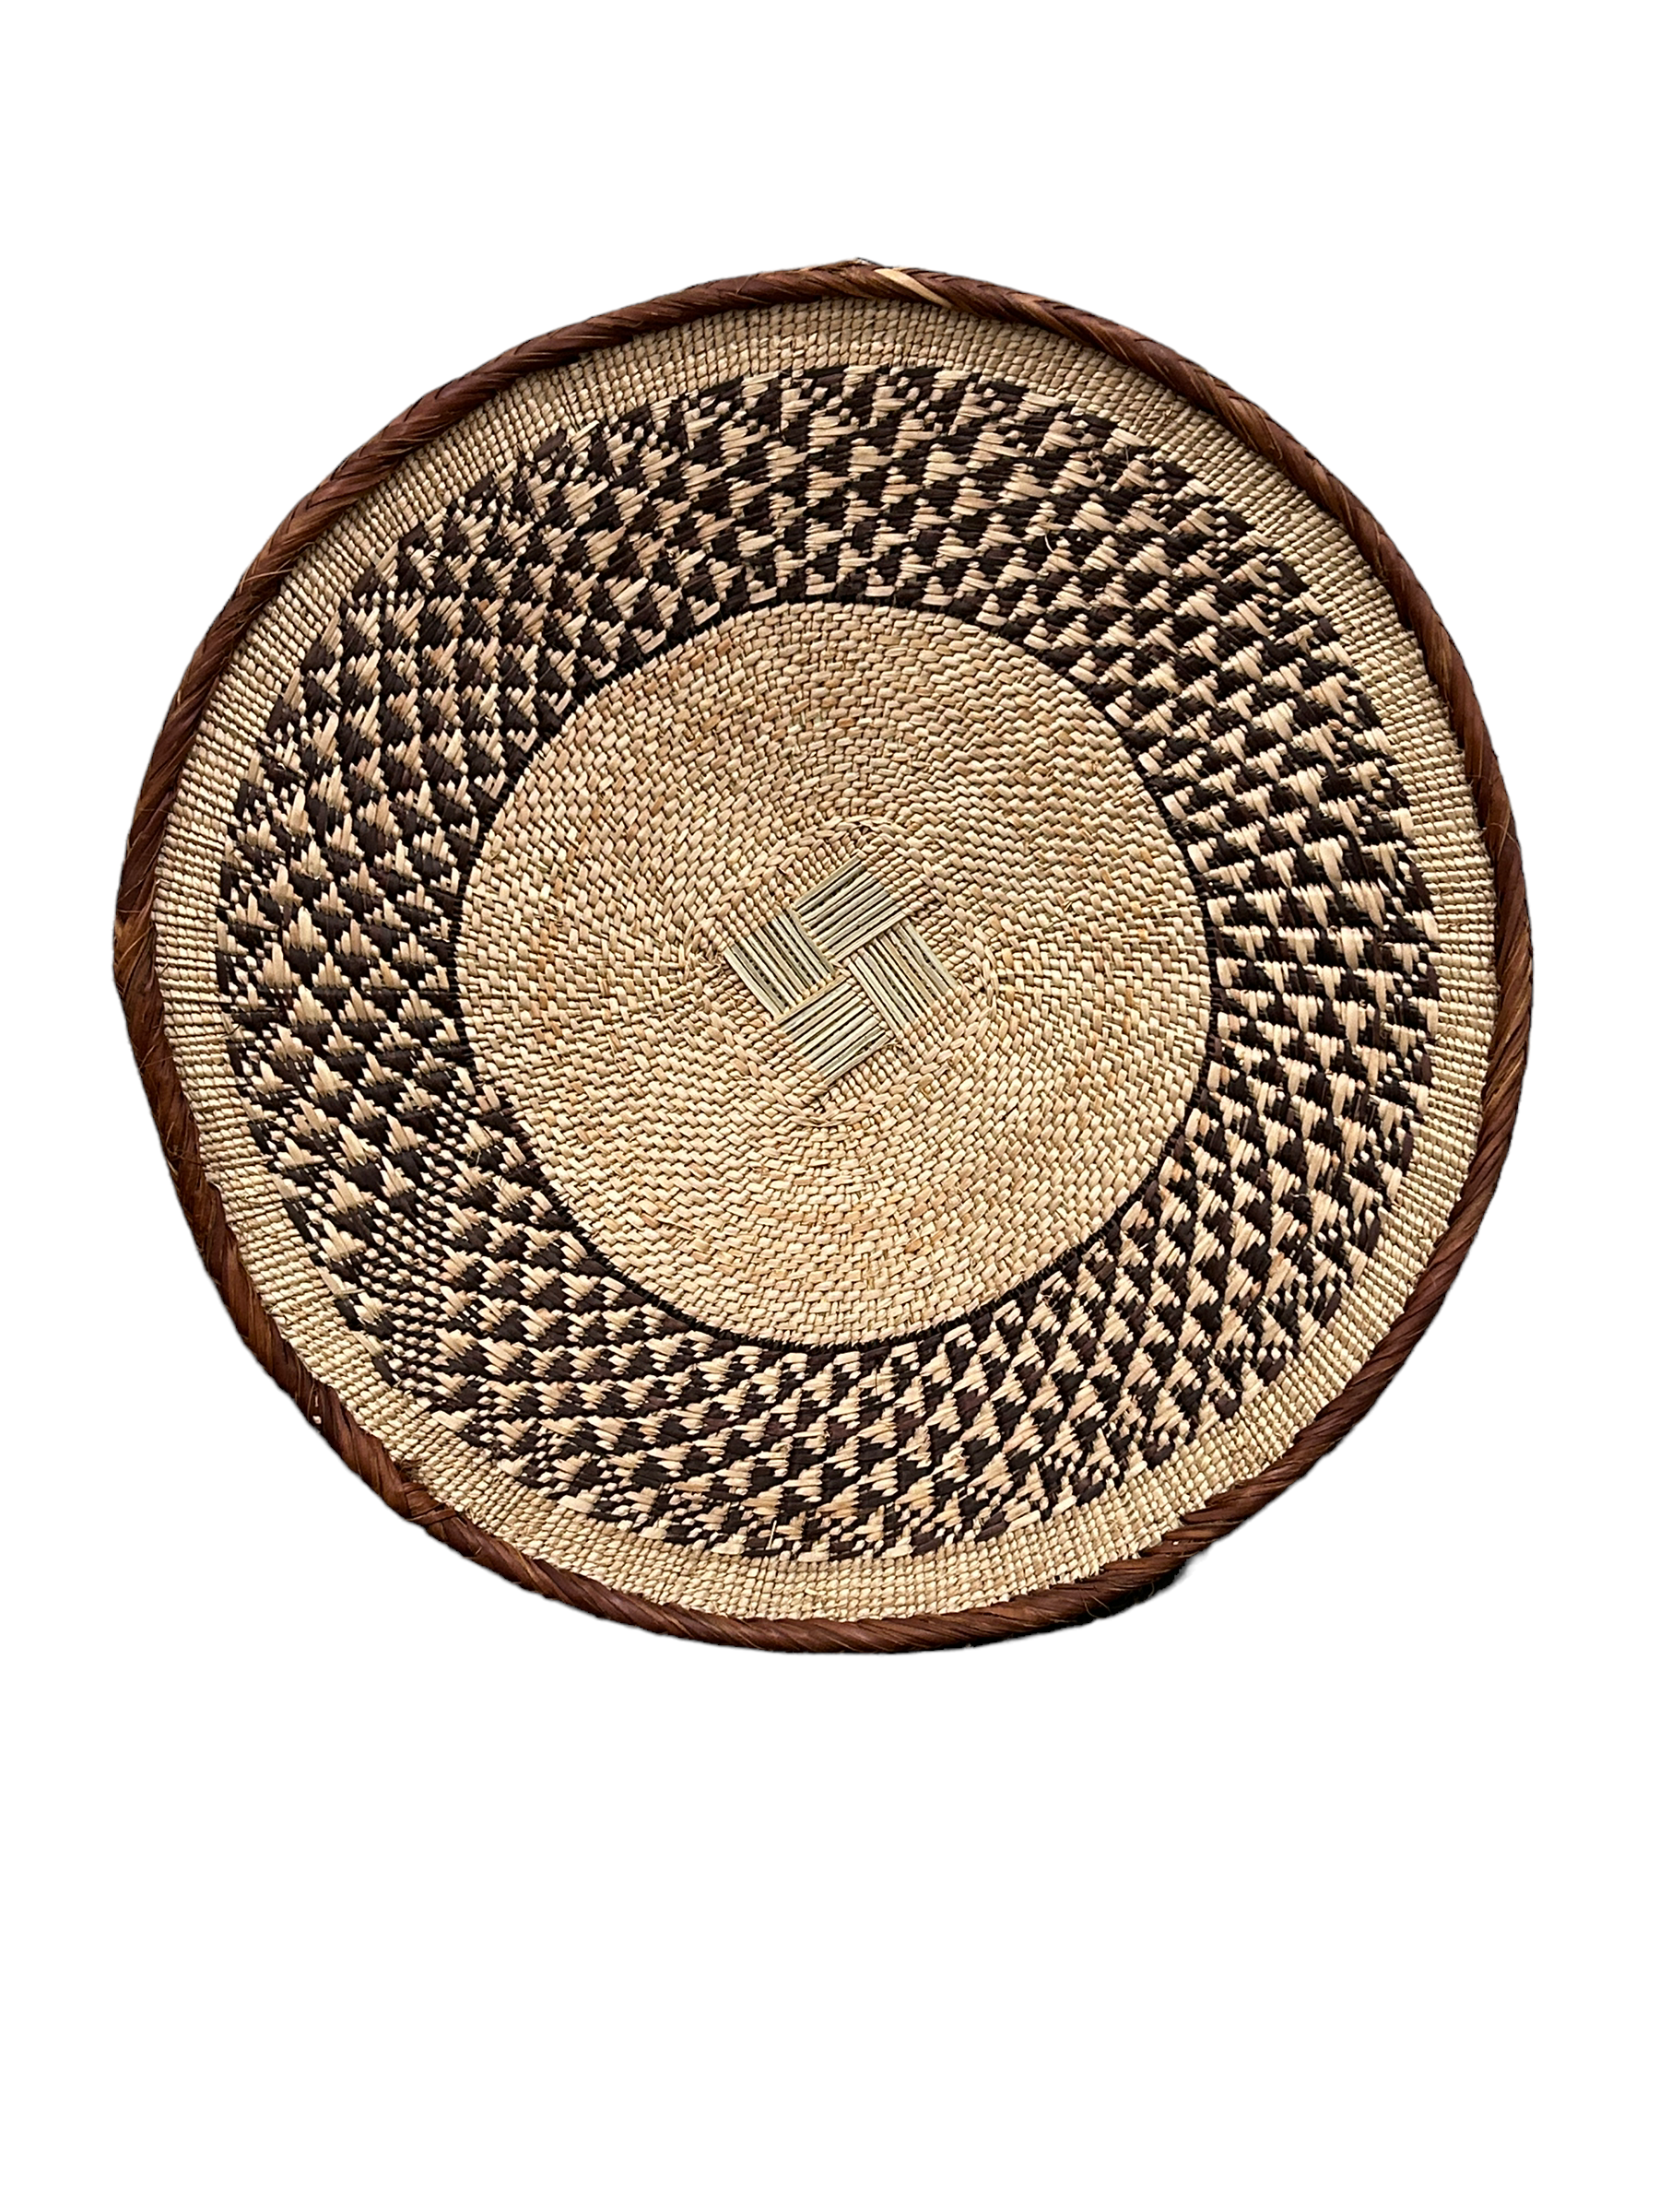 botanicalboysuk Tonga Basket Natural (47-01)